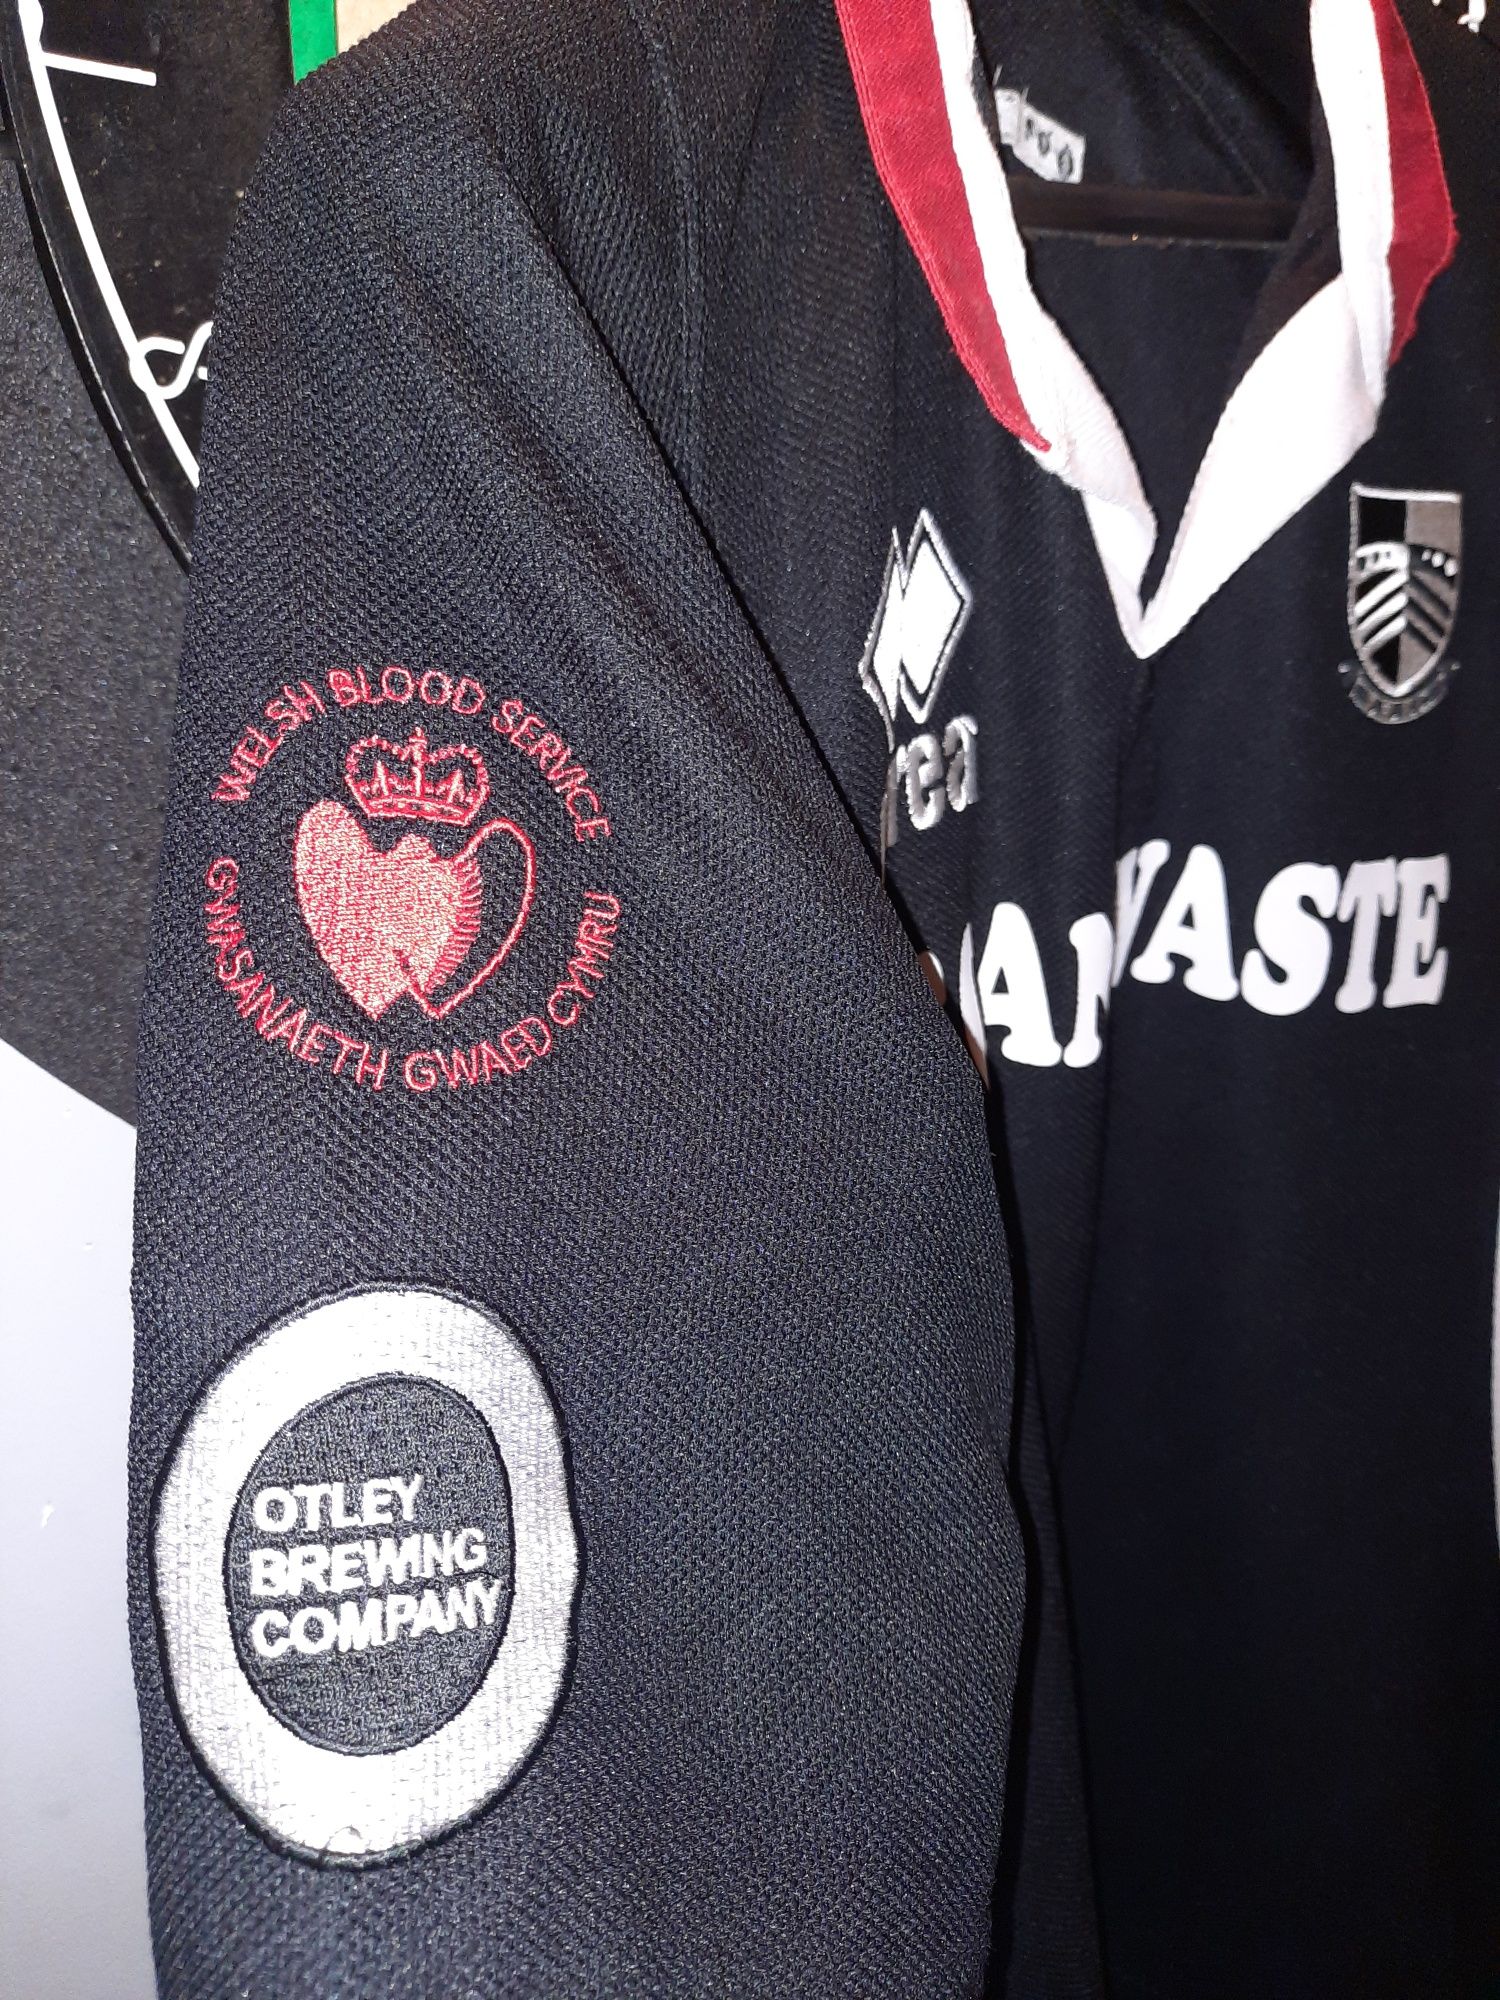 Koszulka rugby Pontypridd RFC, Walia, Errea 3XL